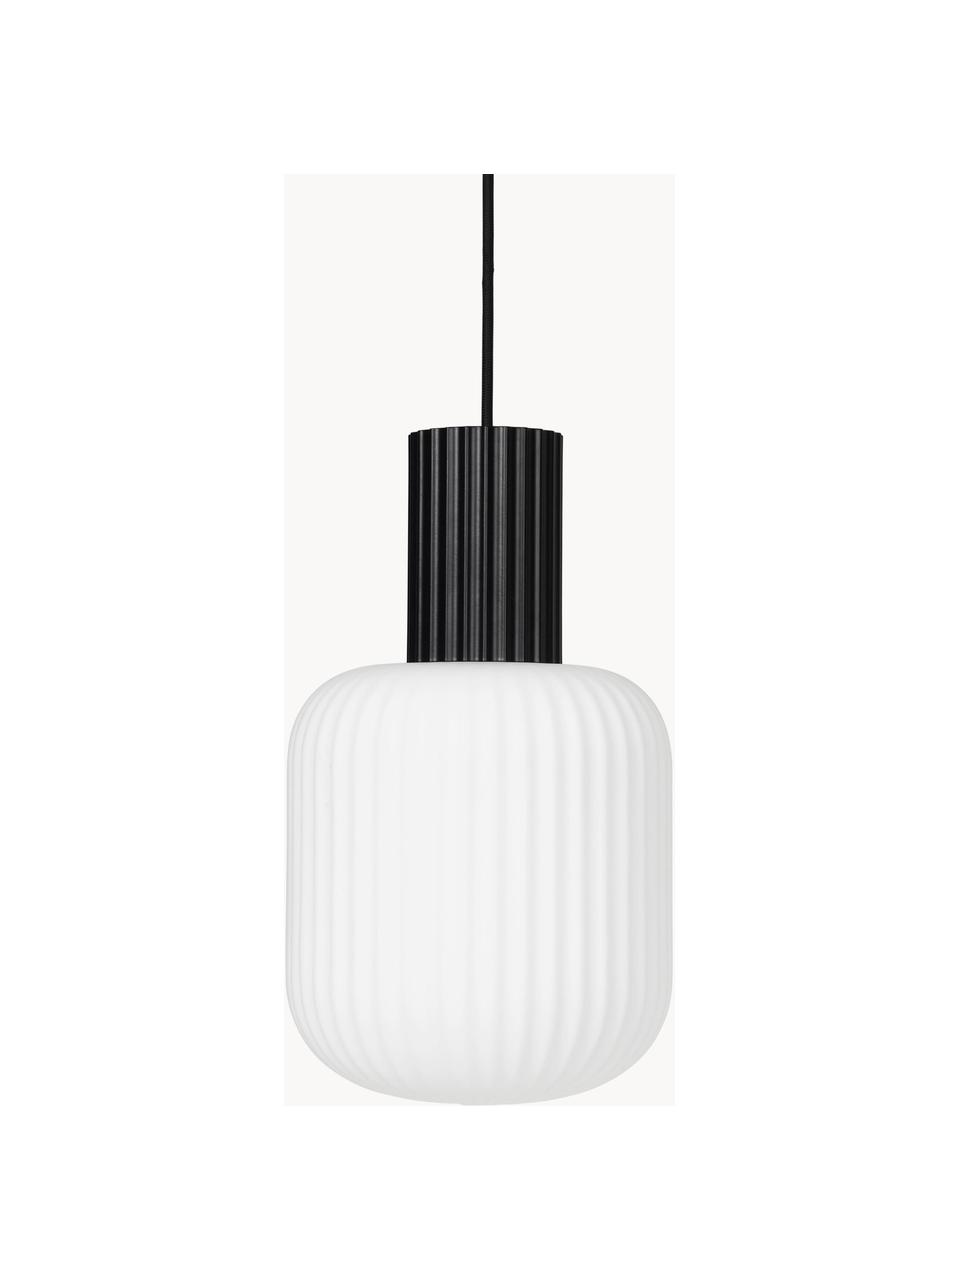 Malé závěsné svítidlo Lolly, Bílá, černá, Ø 20 cm, V 34 cm